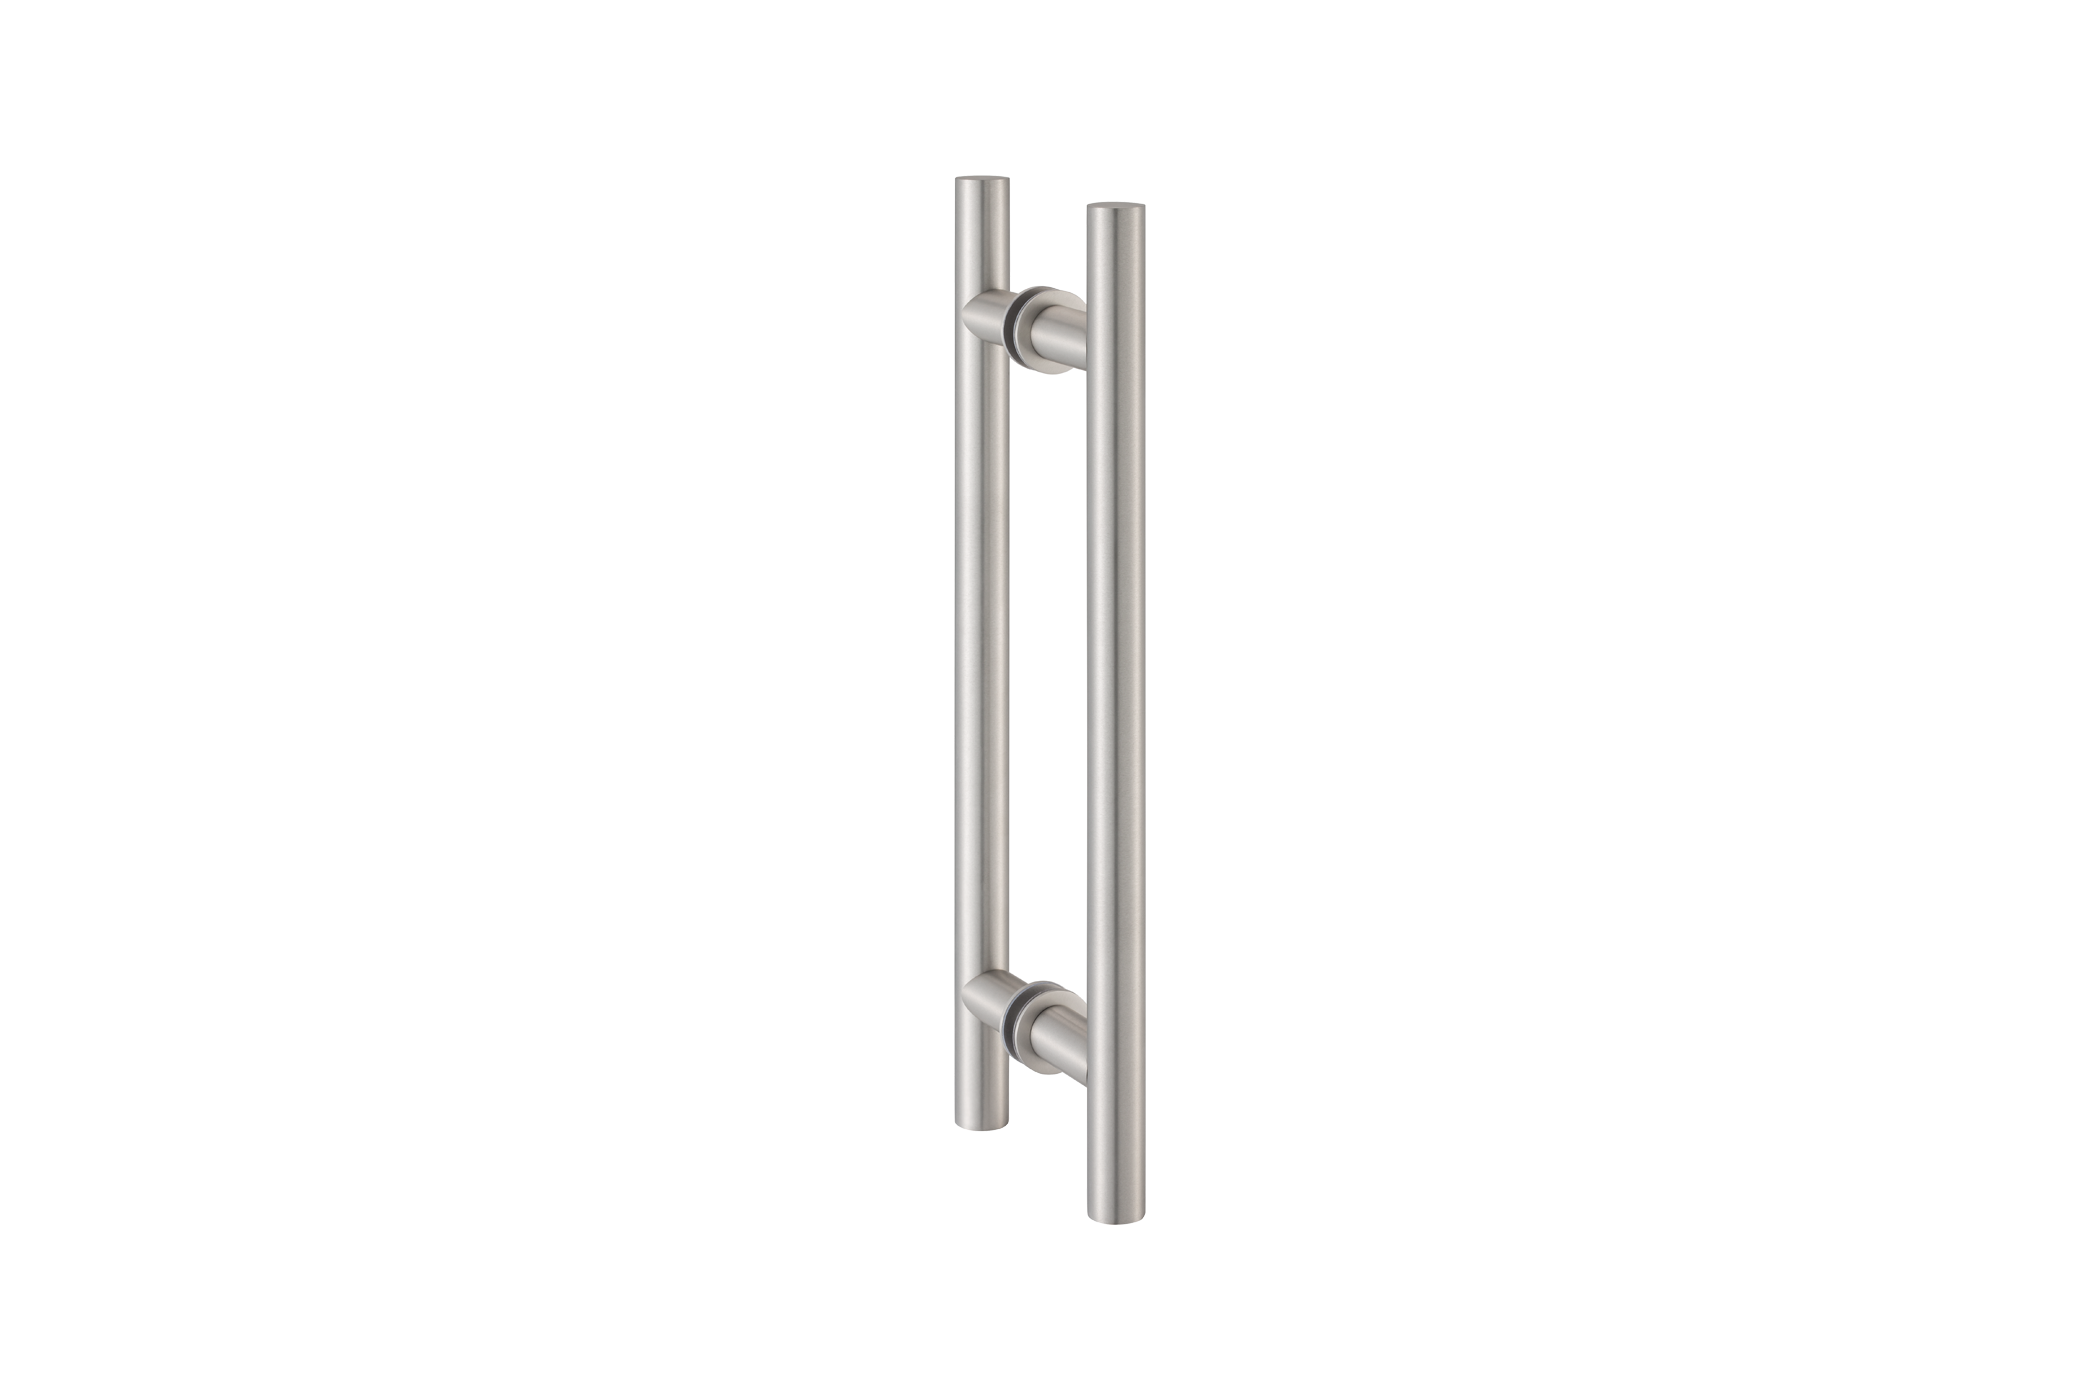 KWS Pair of door handles 8142 in finish 35 (aluminium, stainless steel effect anodised)